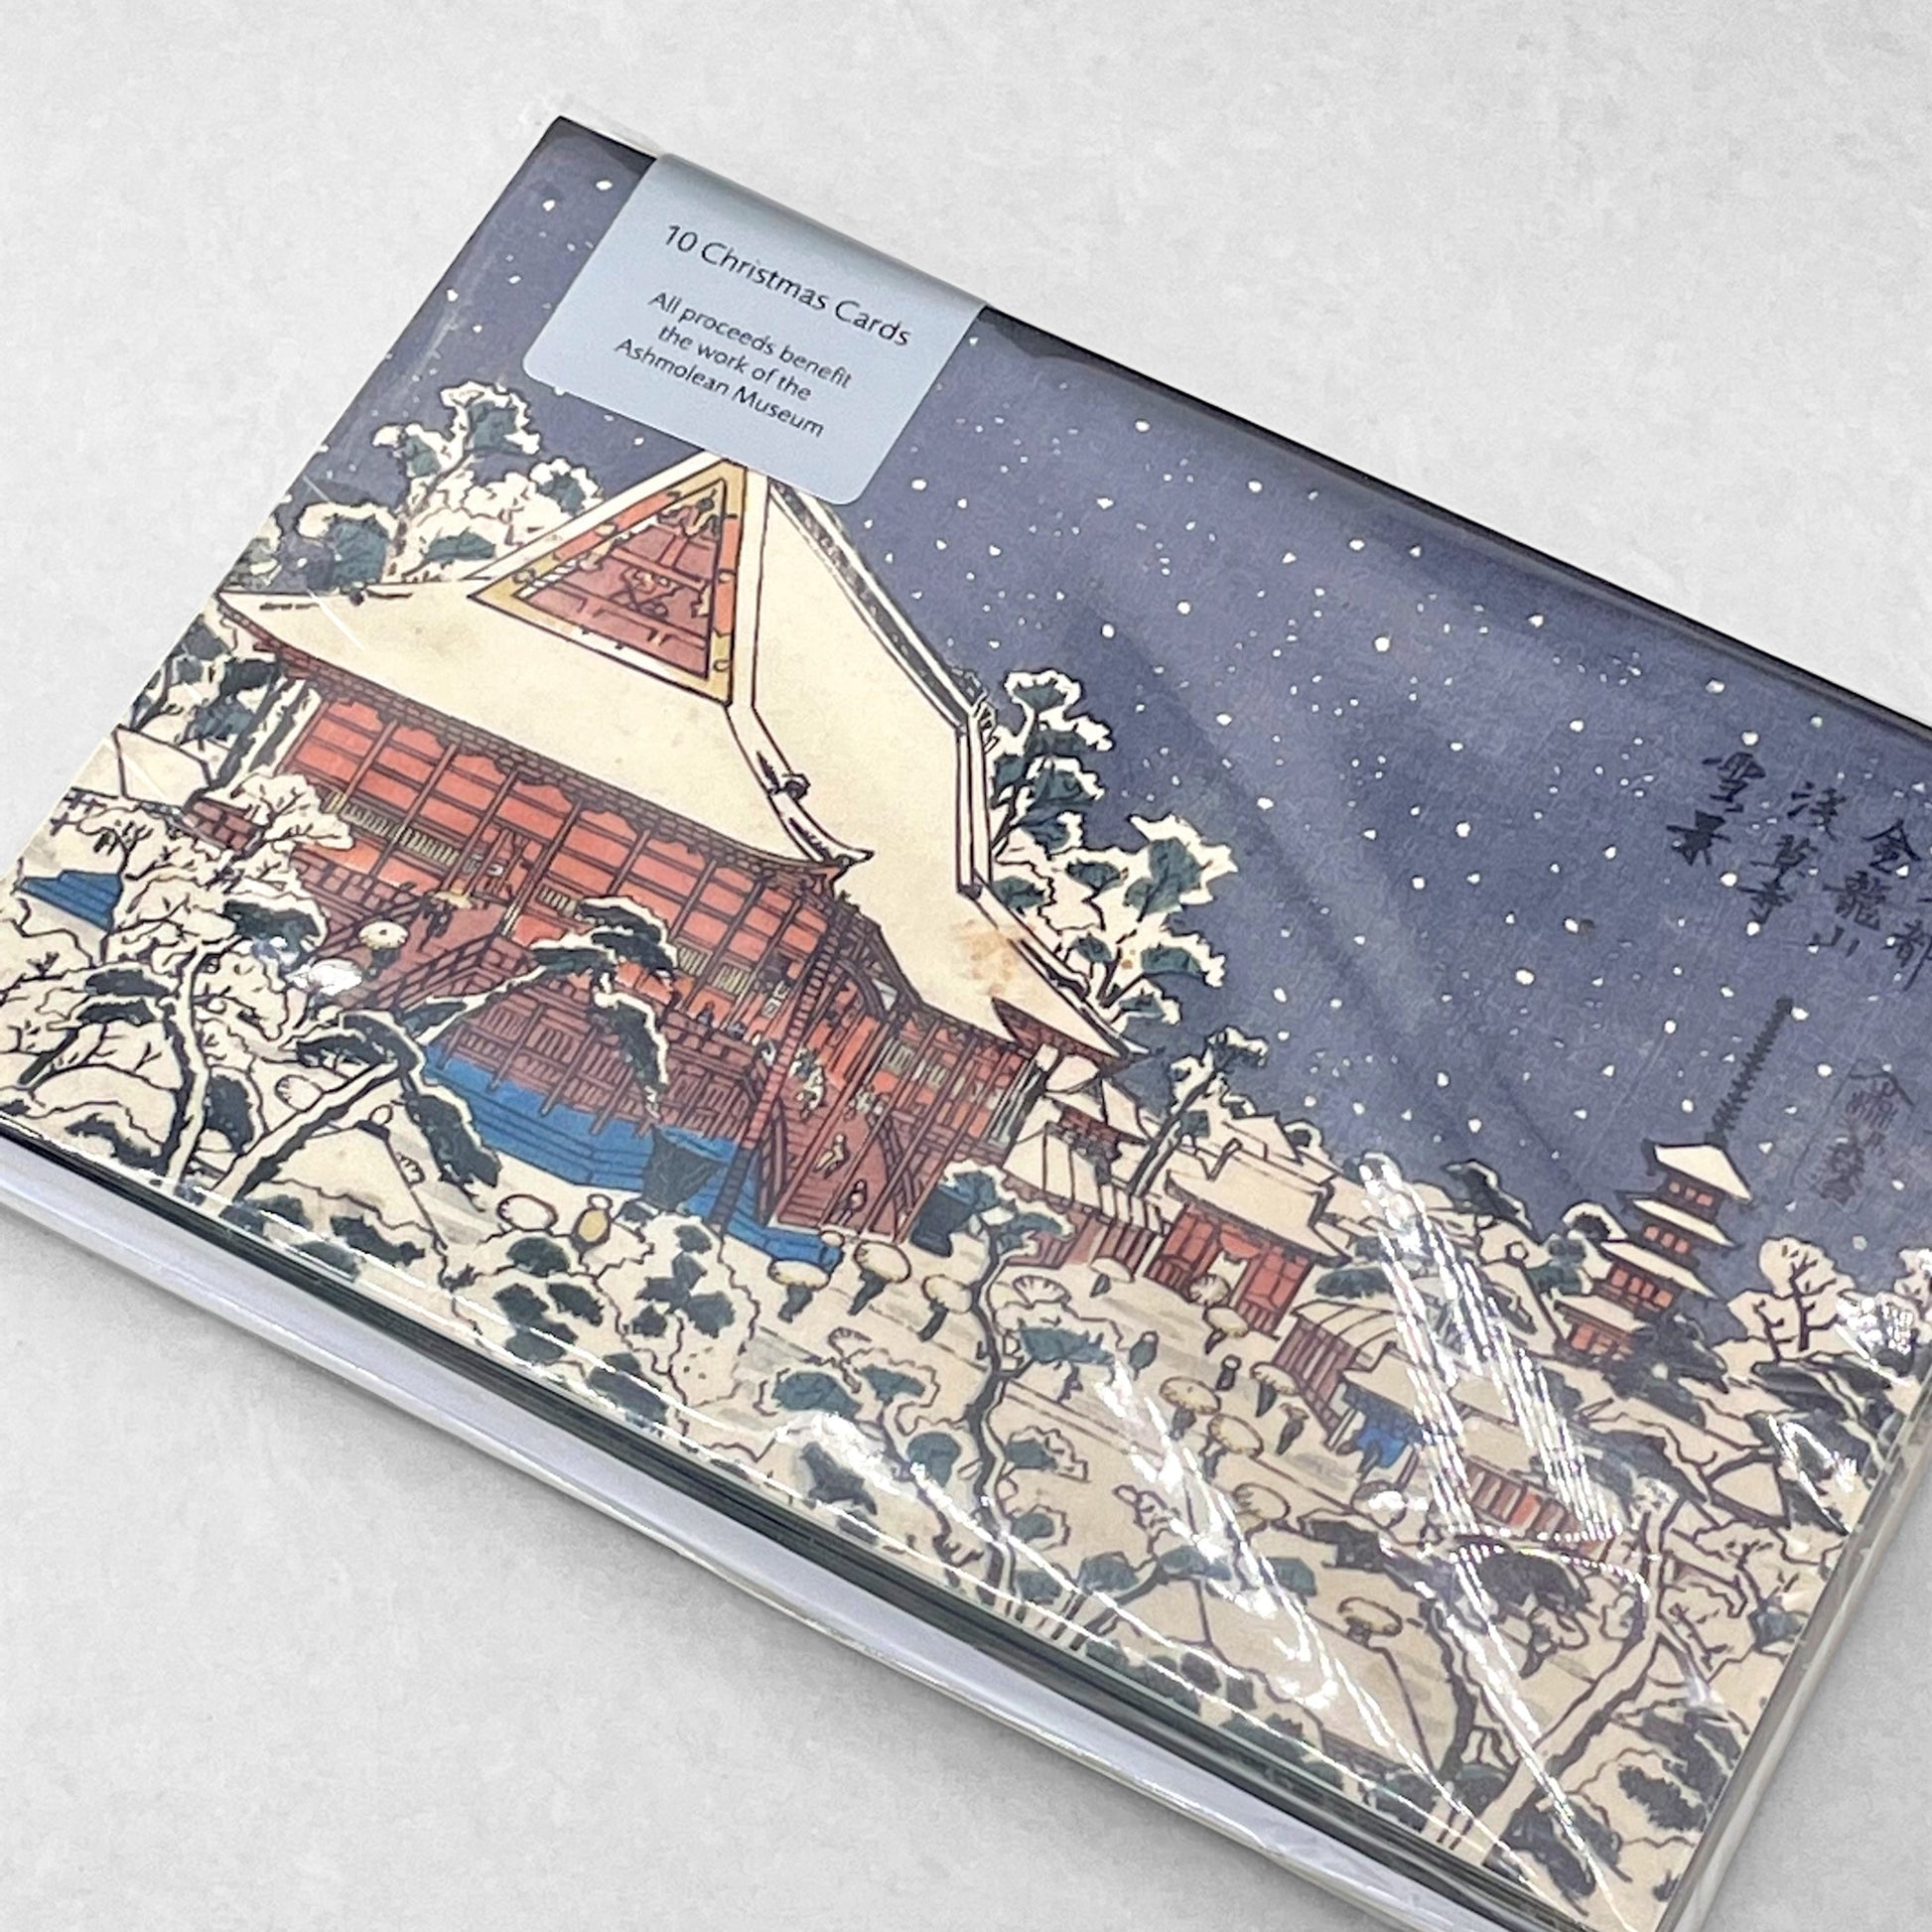 greetings card of senso-ji temple in the snow by John Austin Publishing